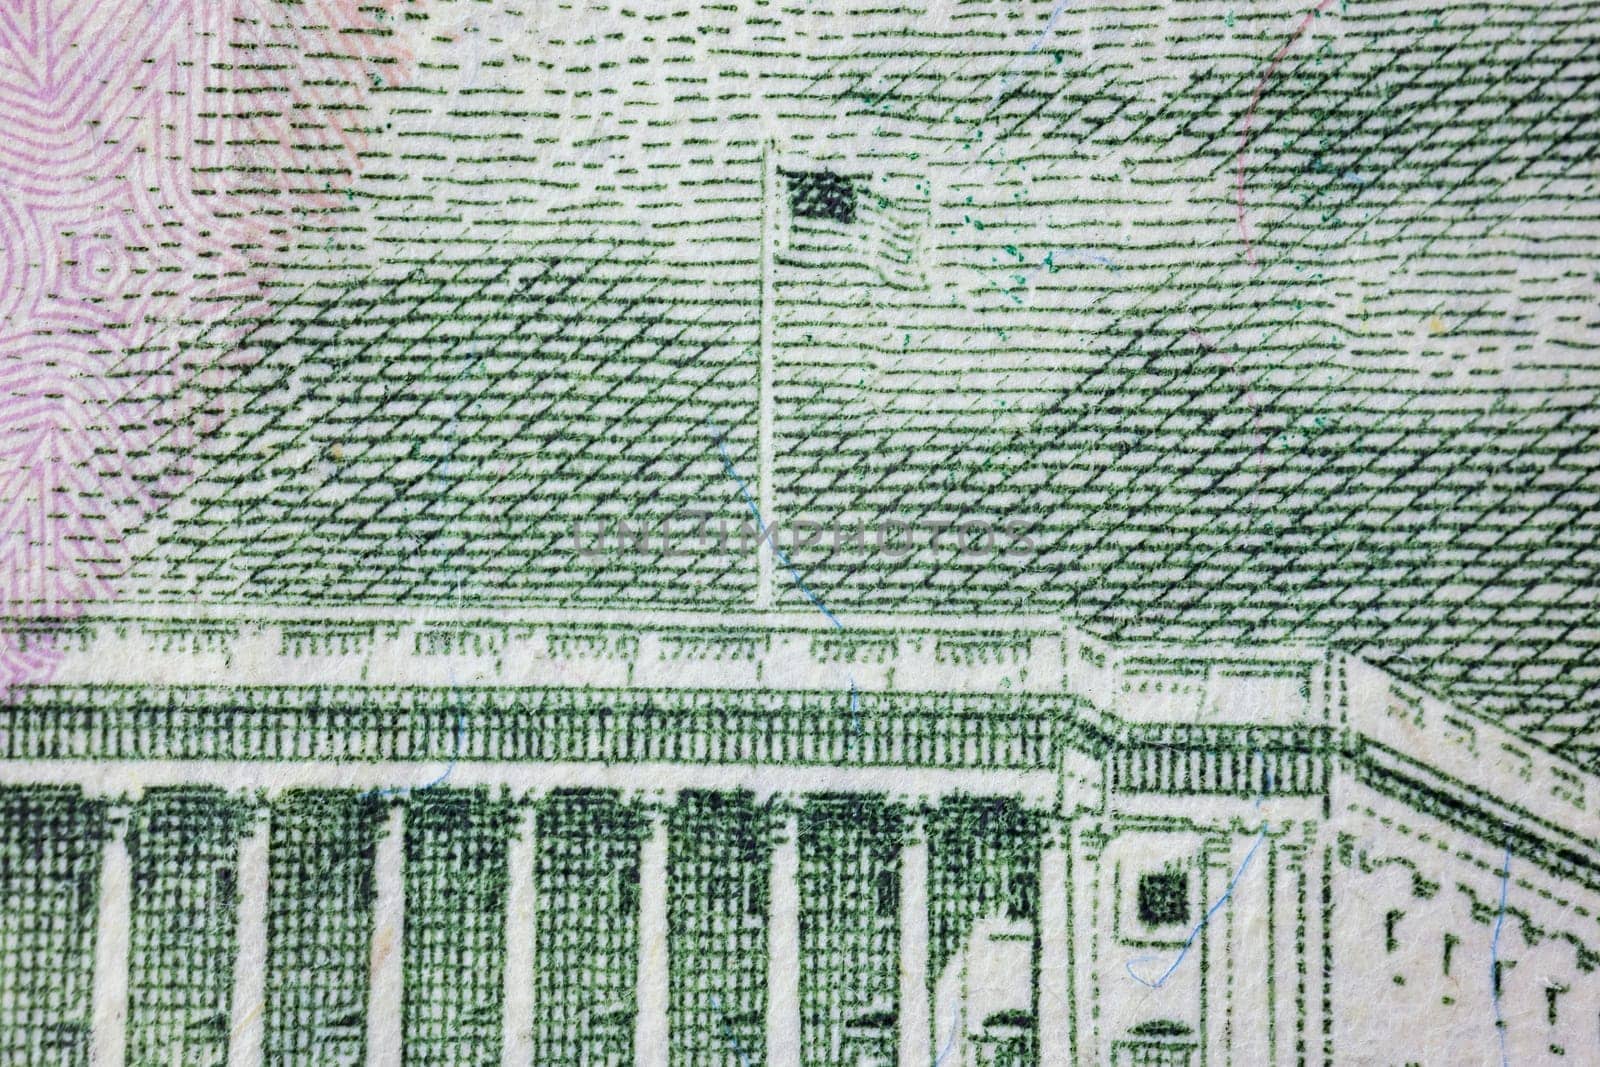 Capitol close-up on a fifty dollar bill, macro shot